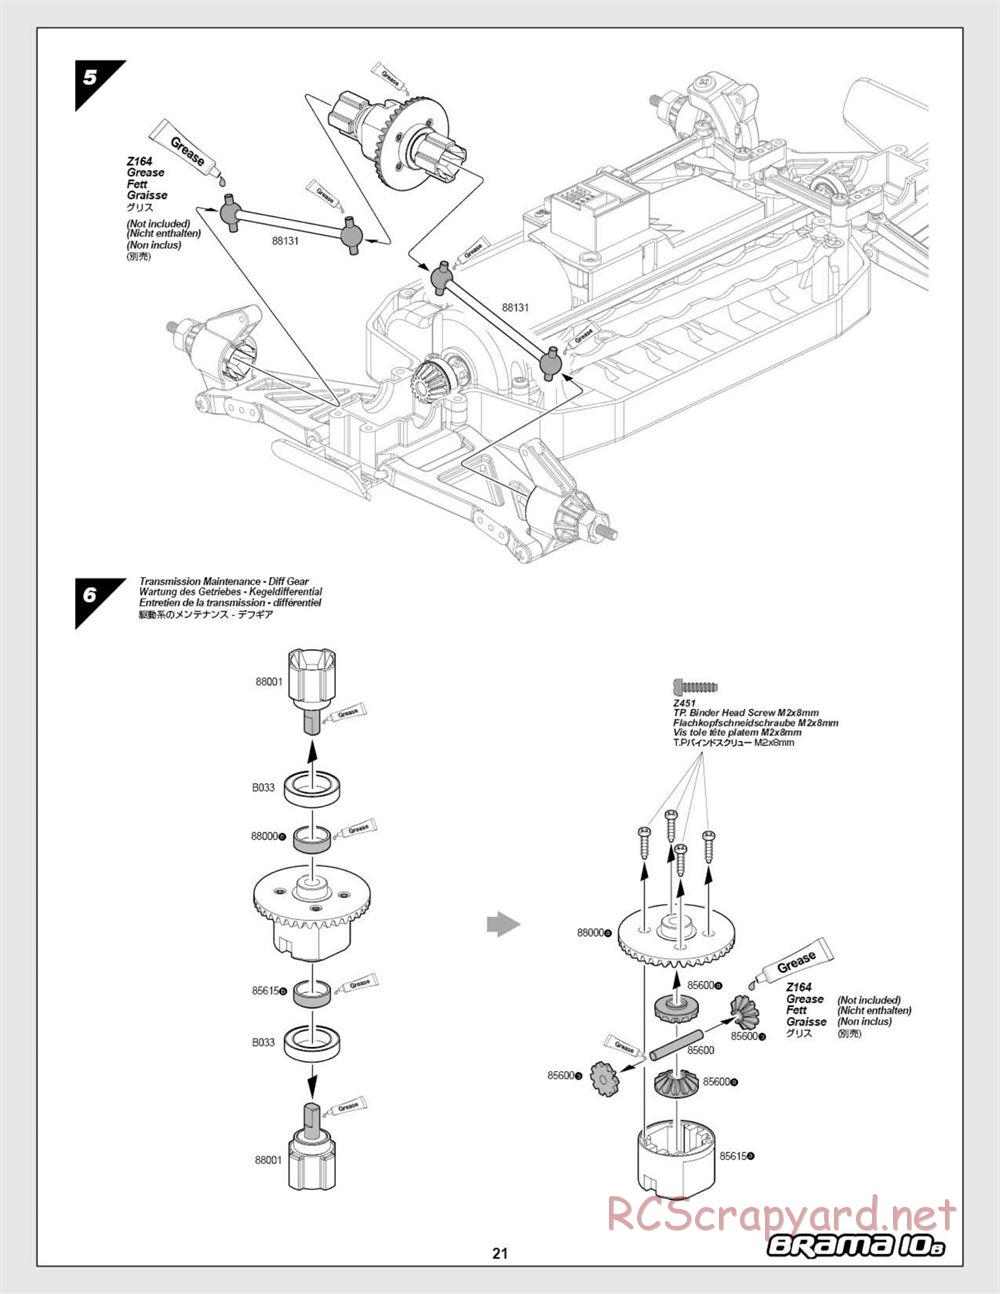 HPI - Brama 10B - Manual - Page 21